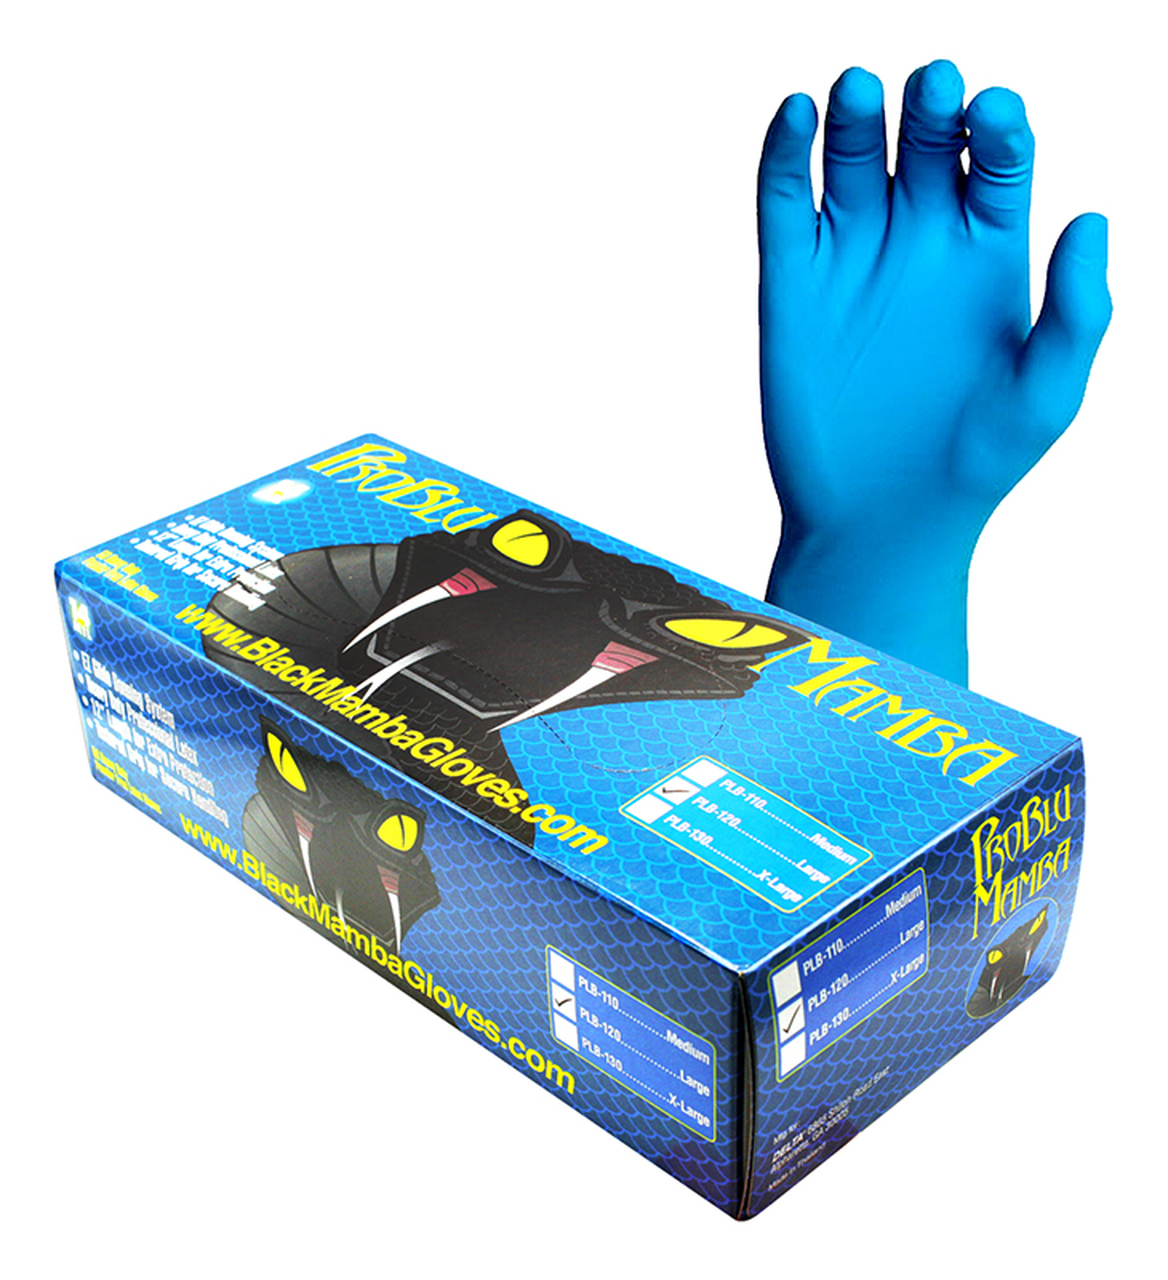 Black Mamba Industrial Strength Nitrile Gloves Medium Box of 100